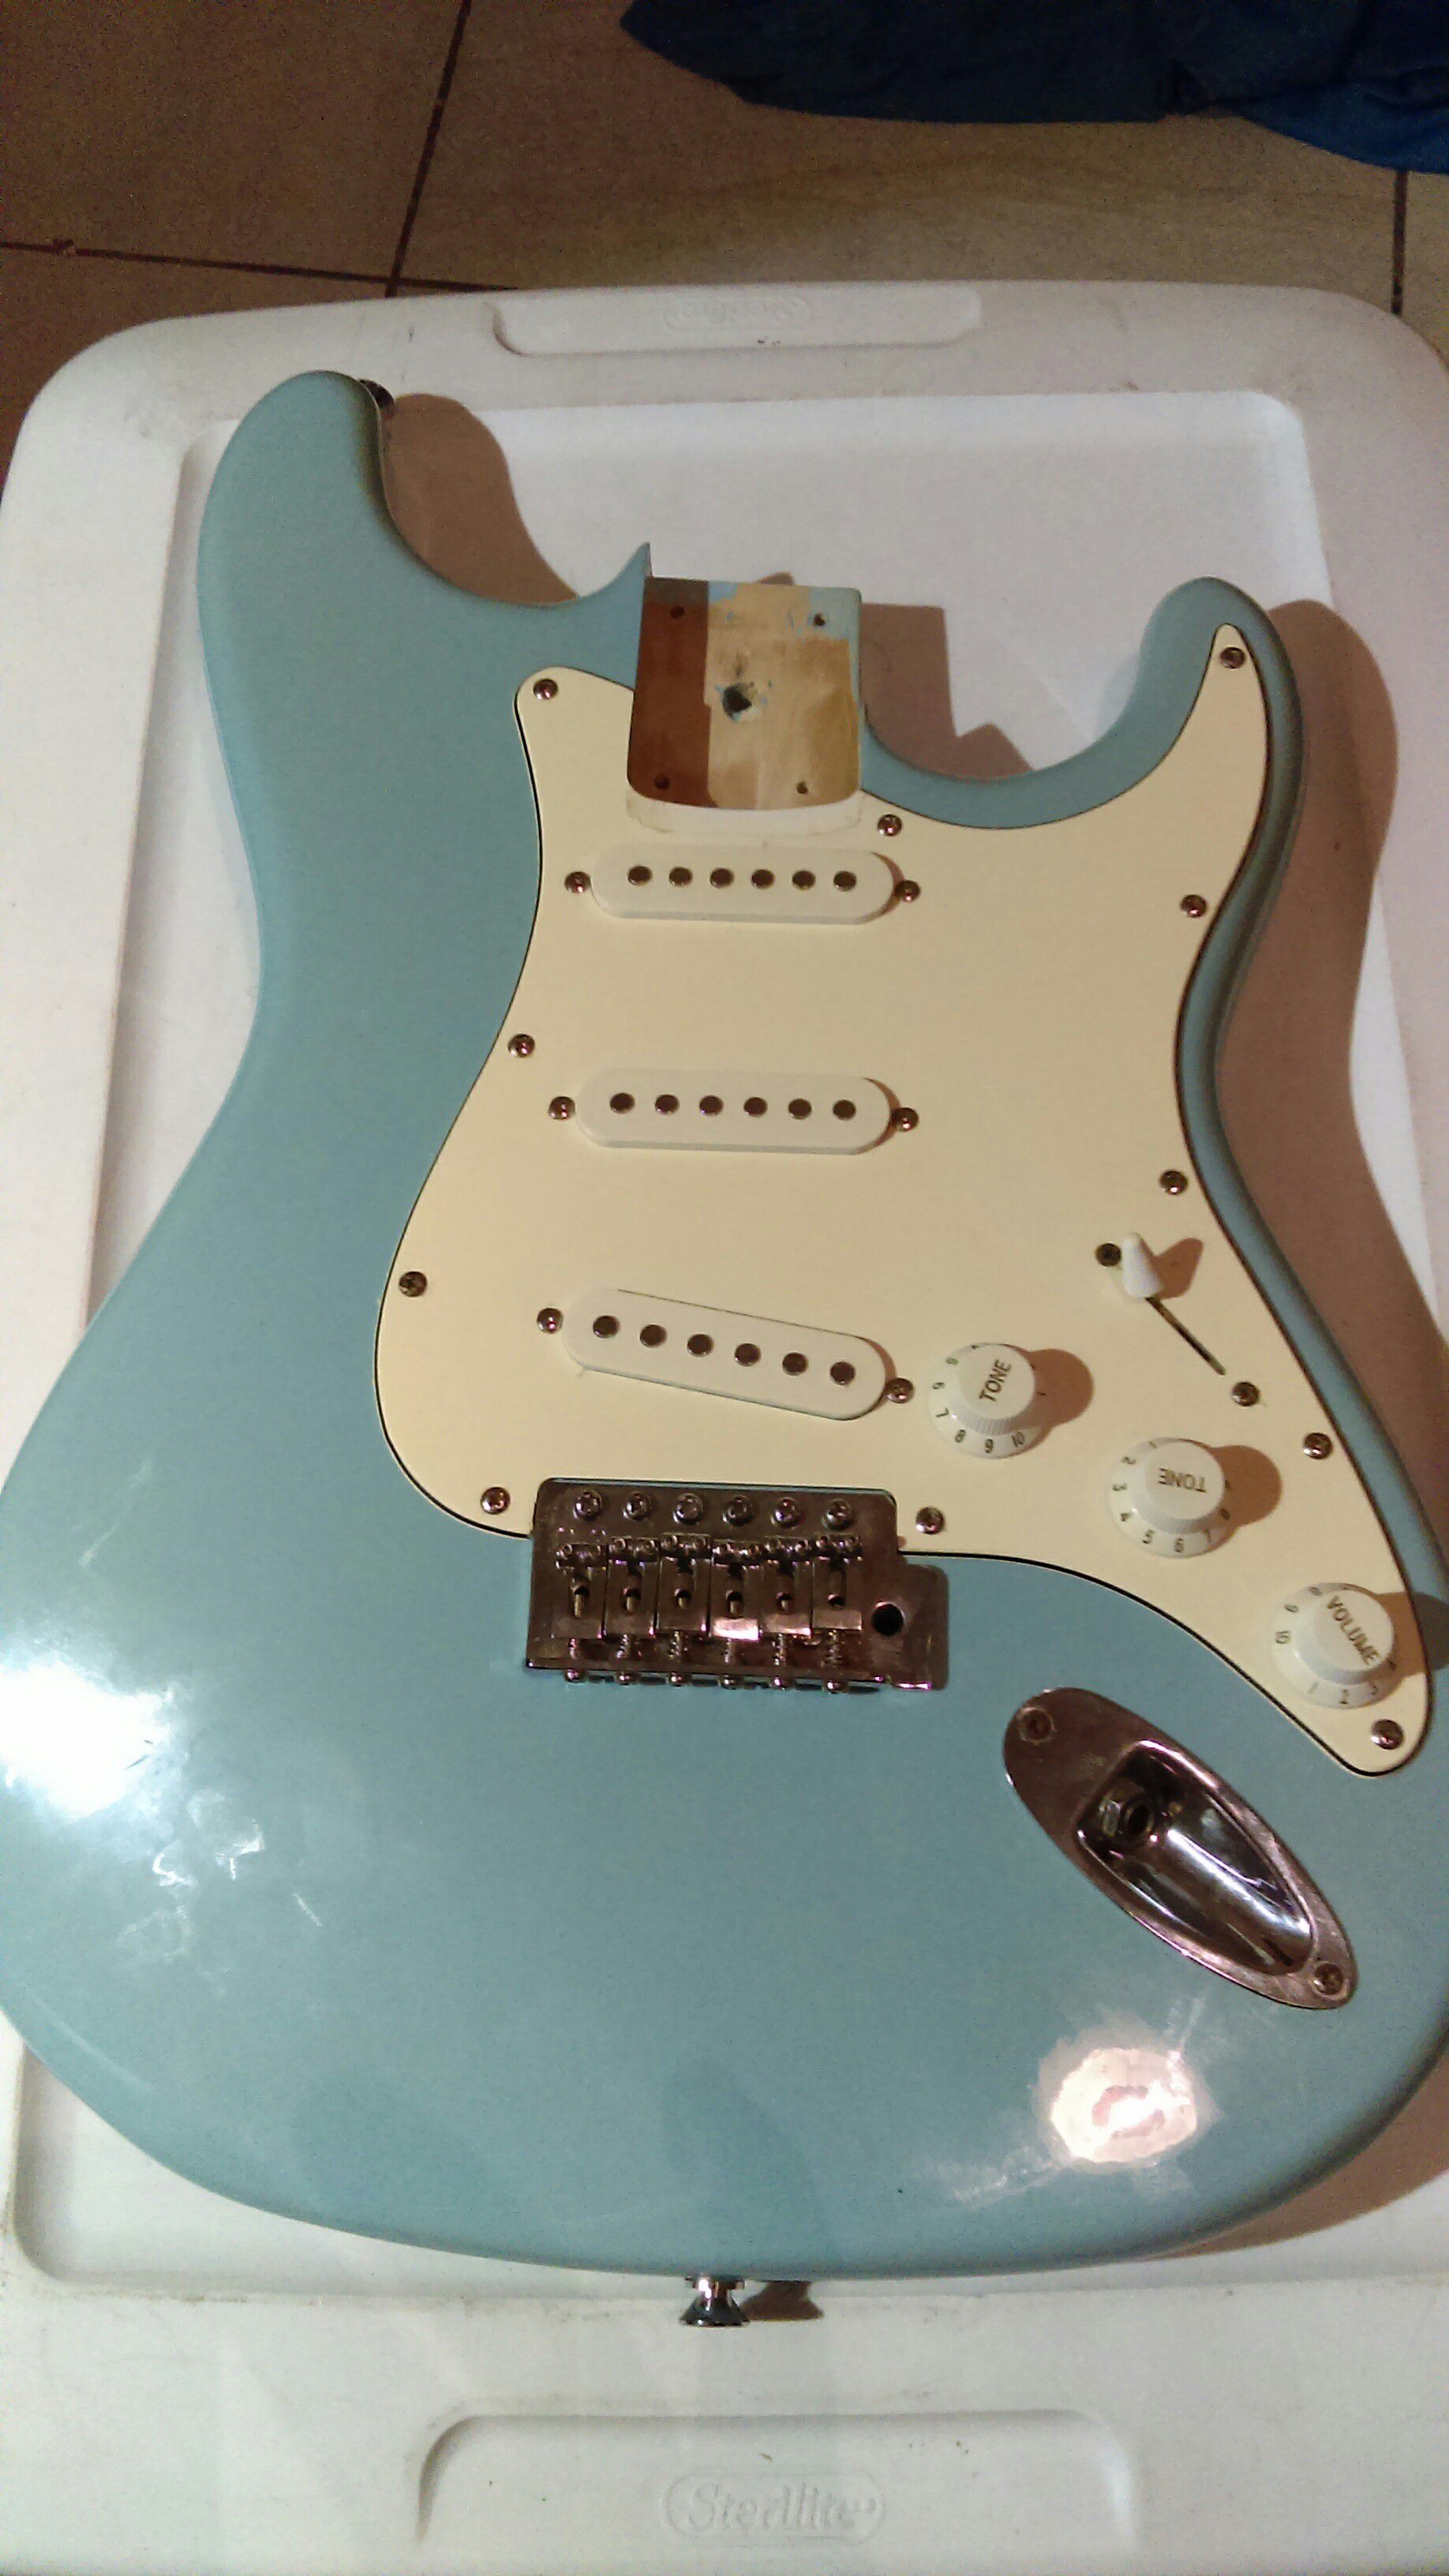 Stratocaster daphne blue guitar body loaded